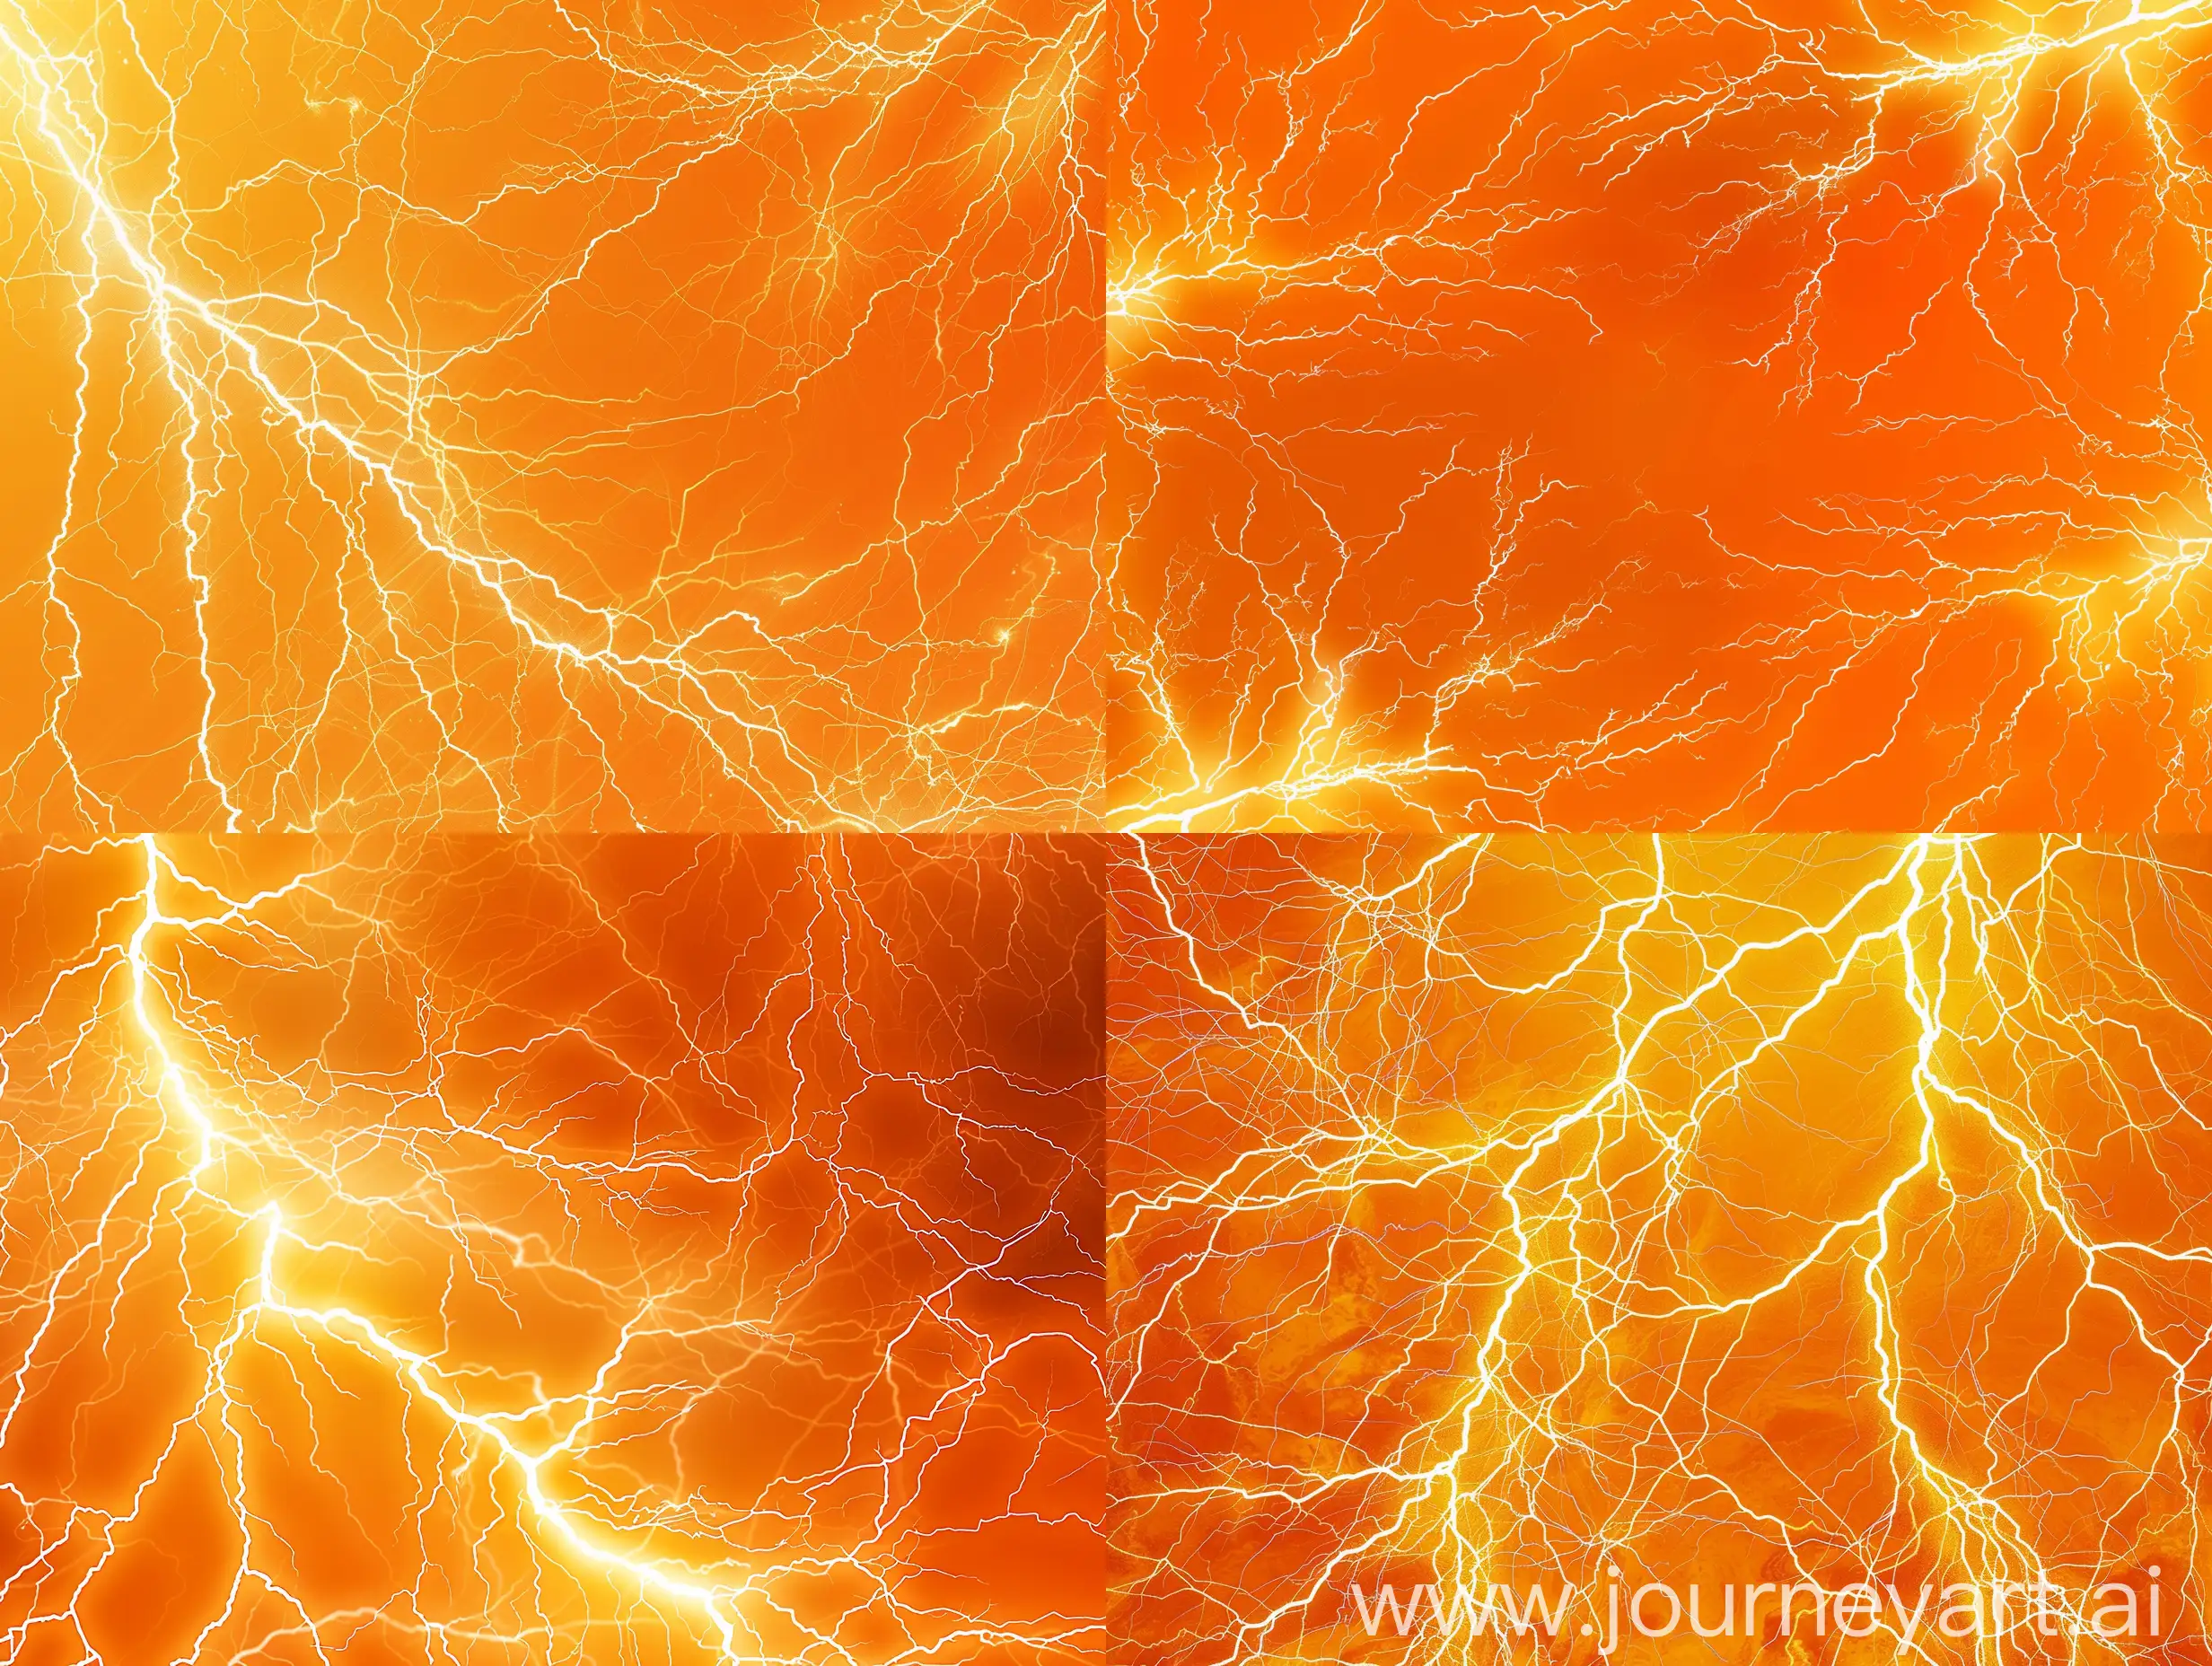 Vibrant-Orange-Lightning-Storm-in-the-Sky